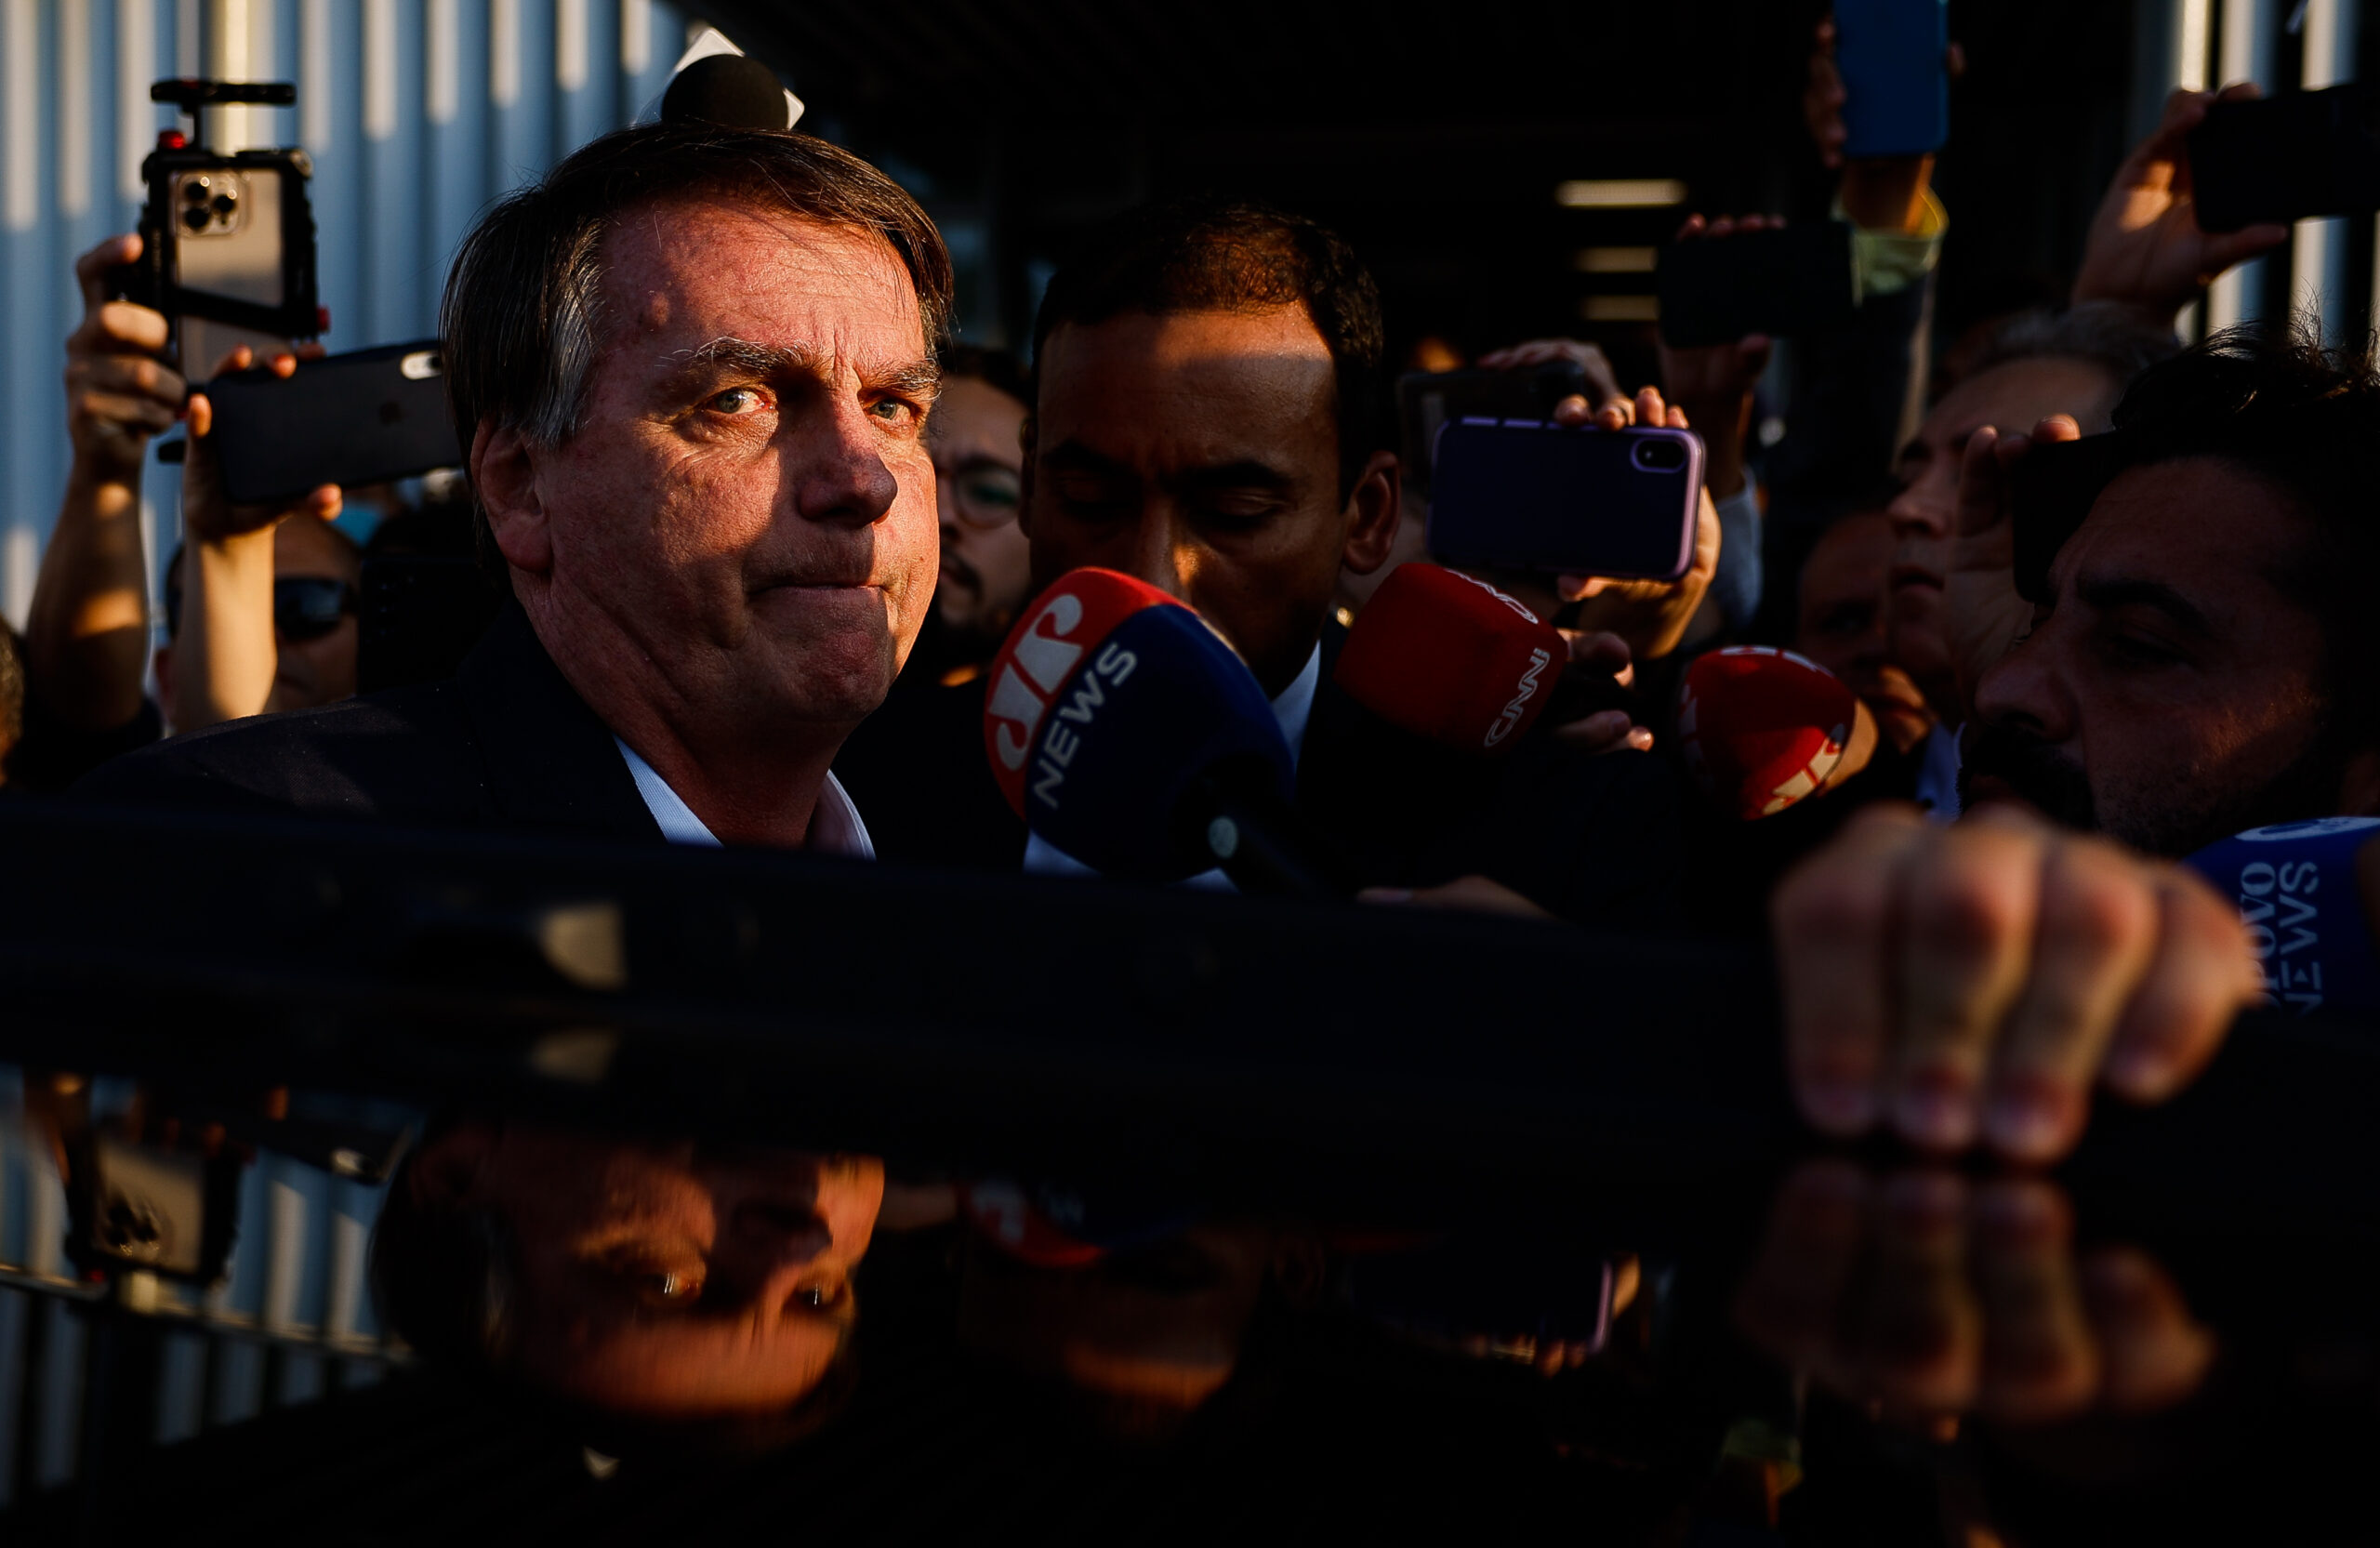 bolsonaro oversaw coup plot, brazilian feds say